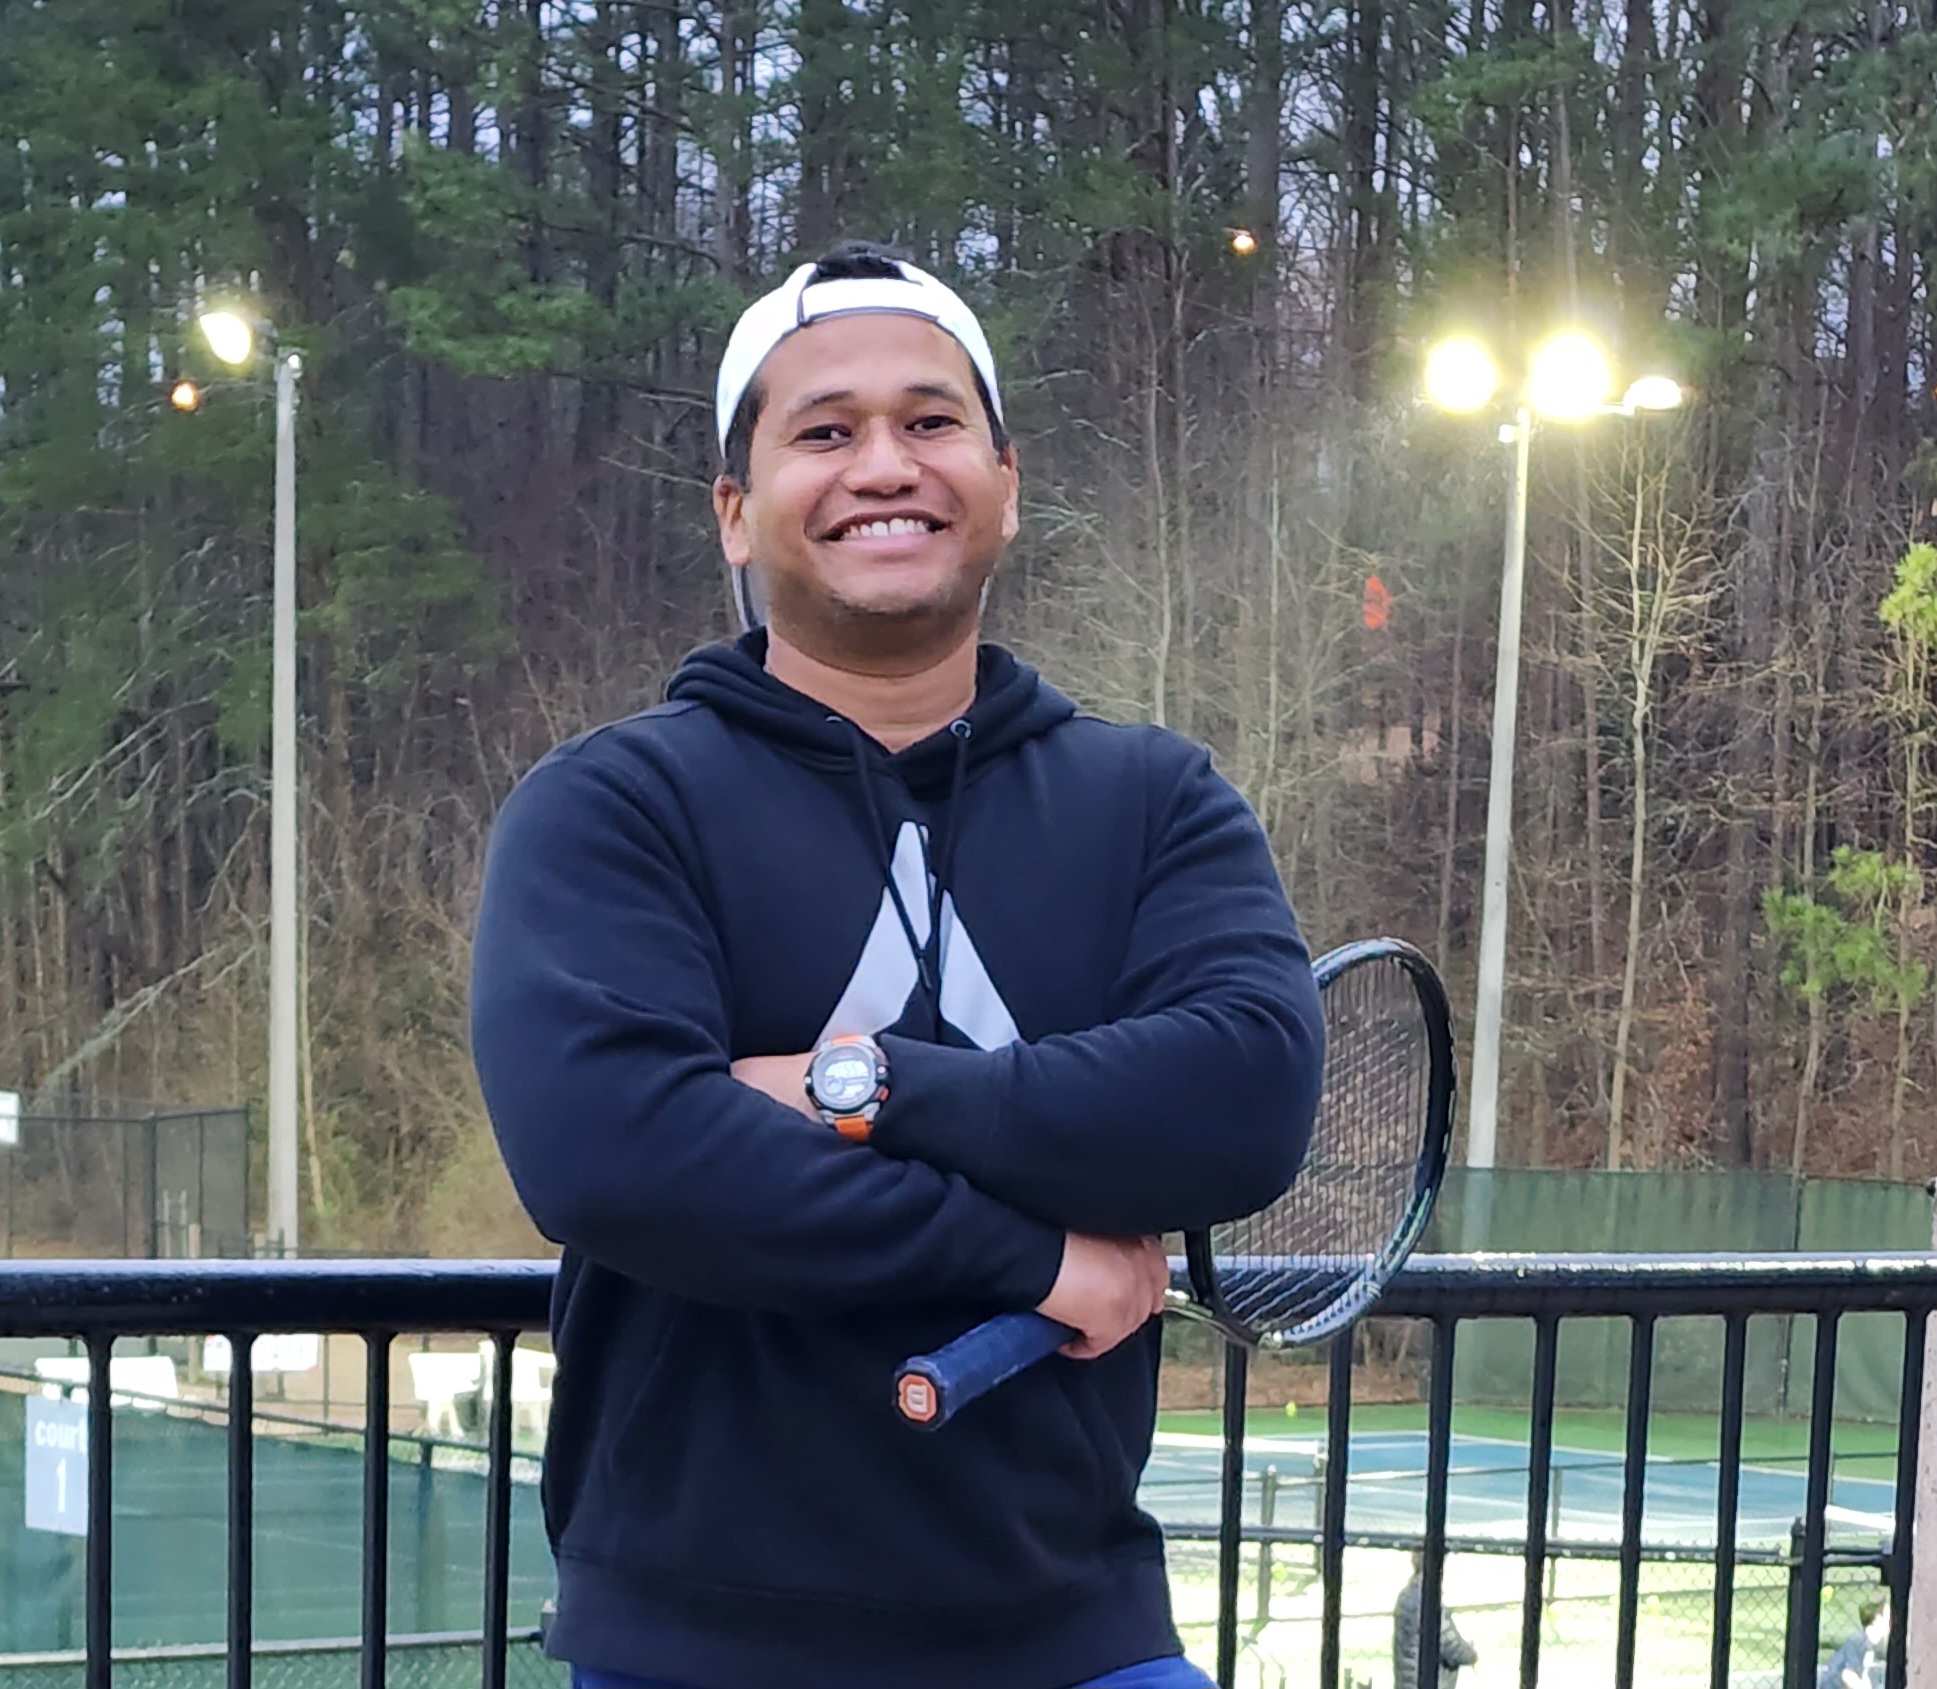 Rathindra K. teaches tennis lessons in Atlanta, GA